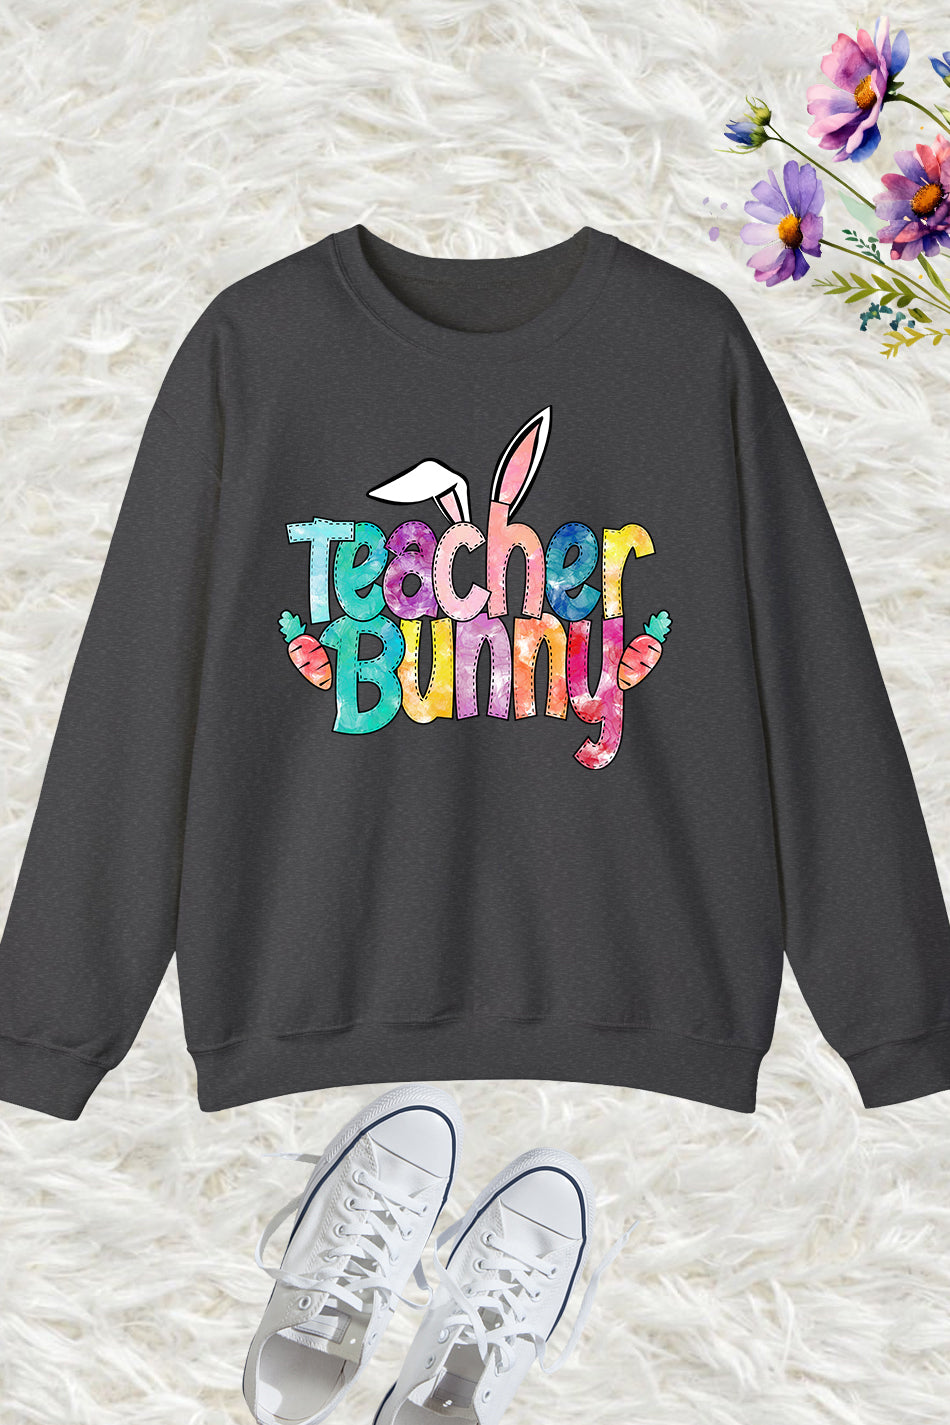 Bunny Teacher Sweatshirt